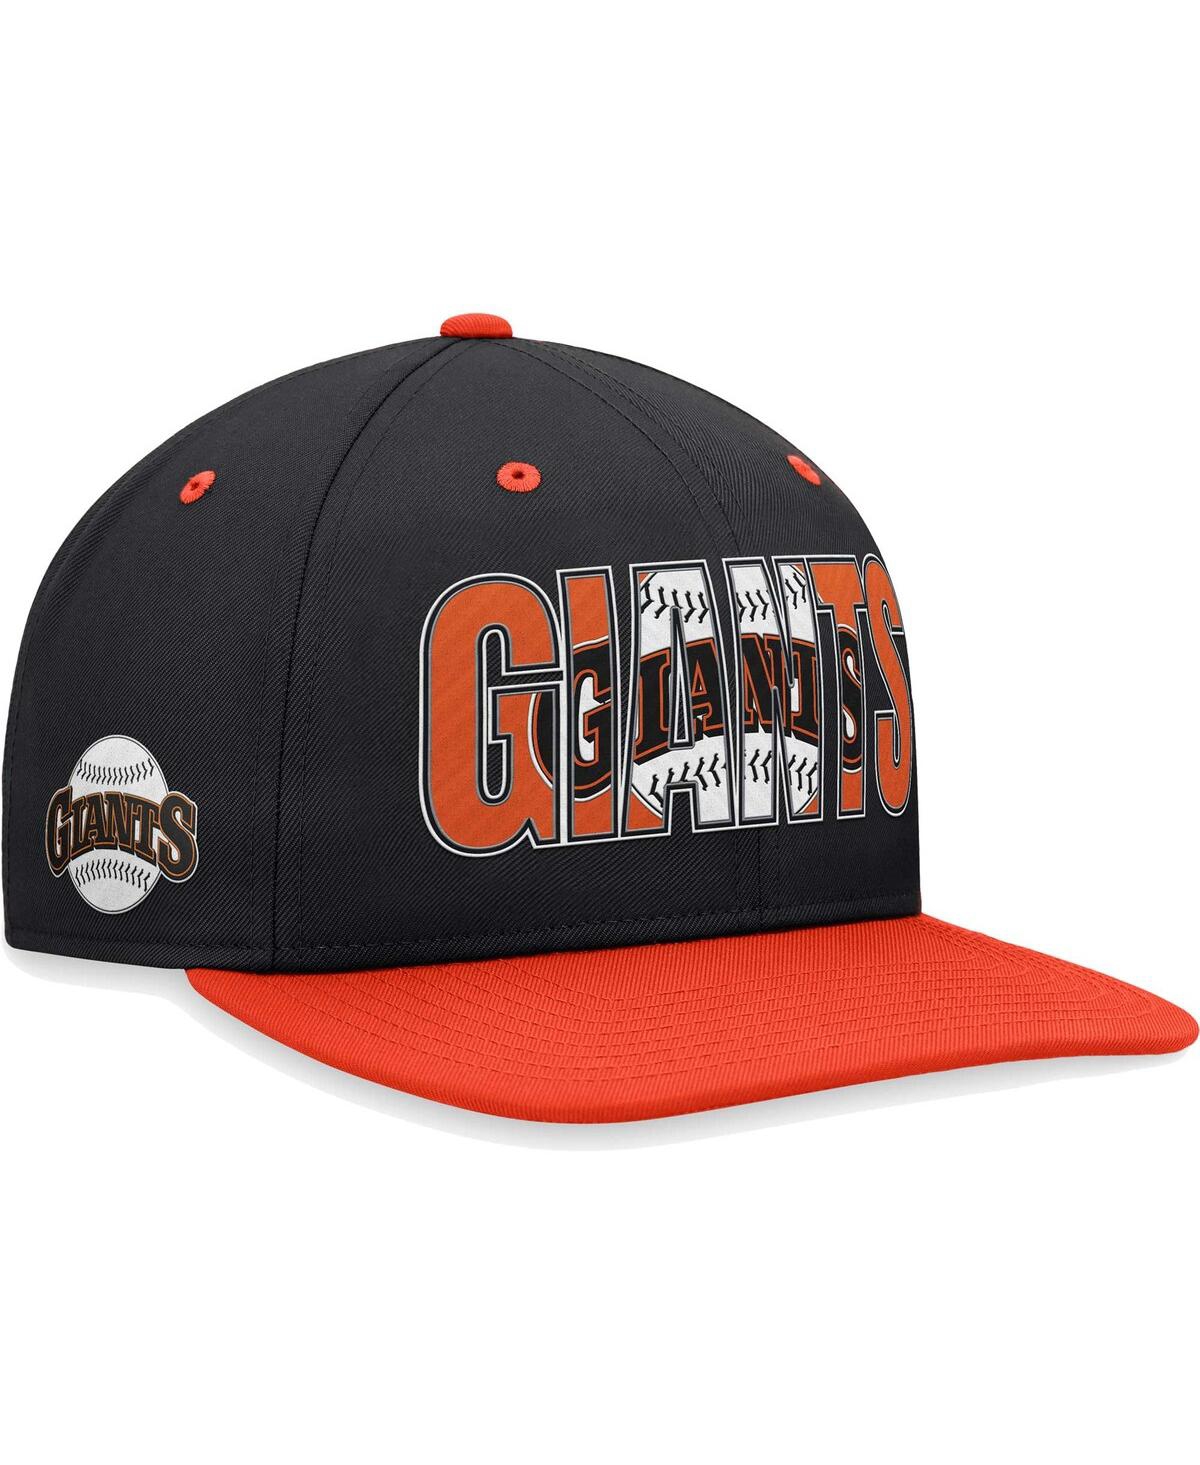 Shop Nike Men's  Black San Francisco Giants Cooperstown Collection Pro Snapback Hat